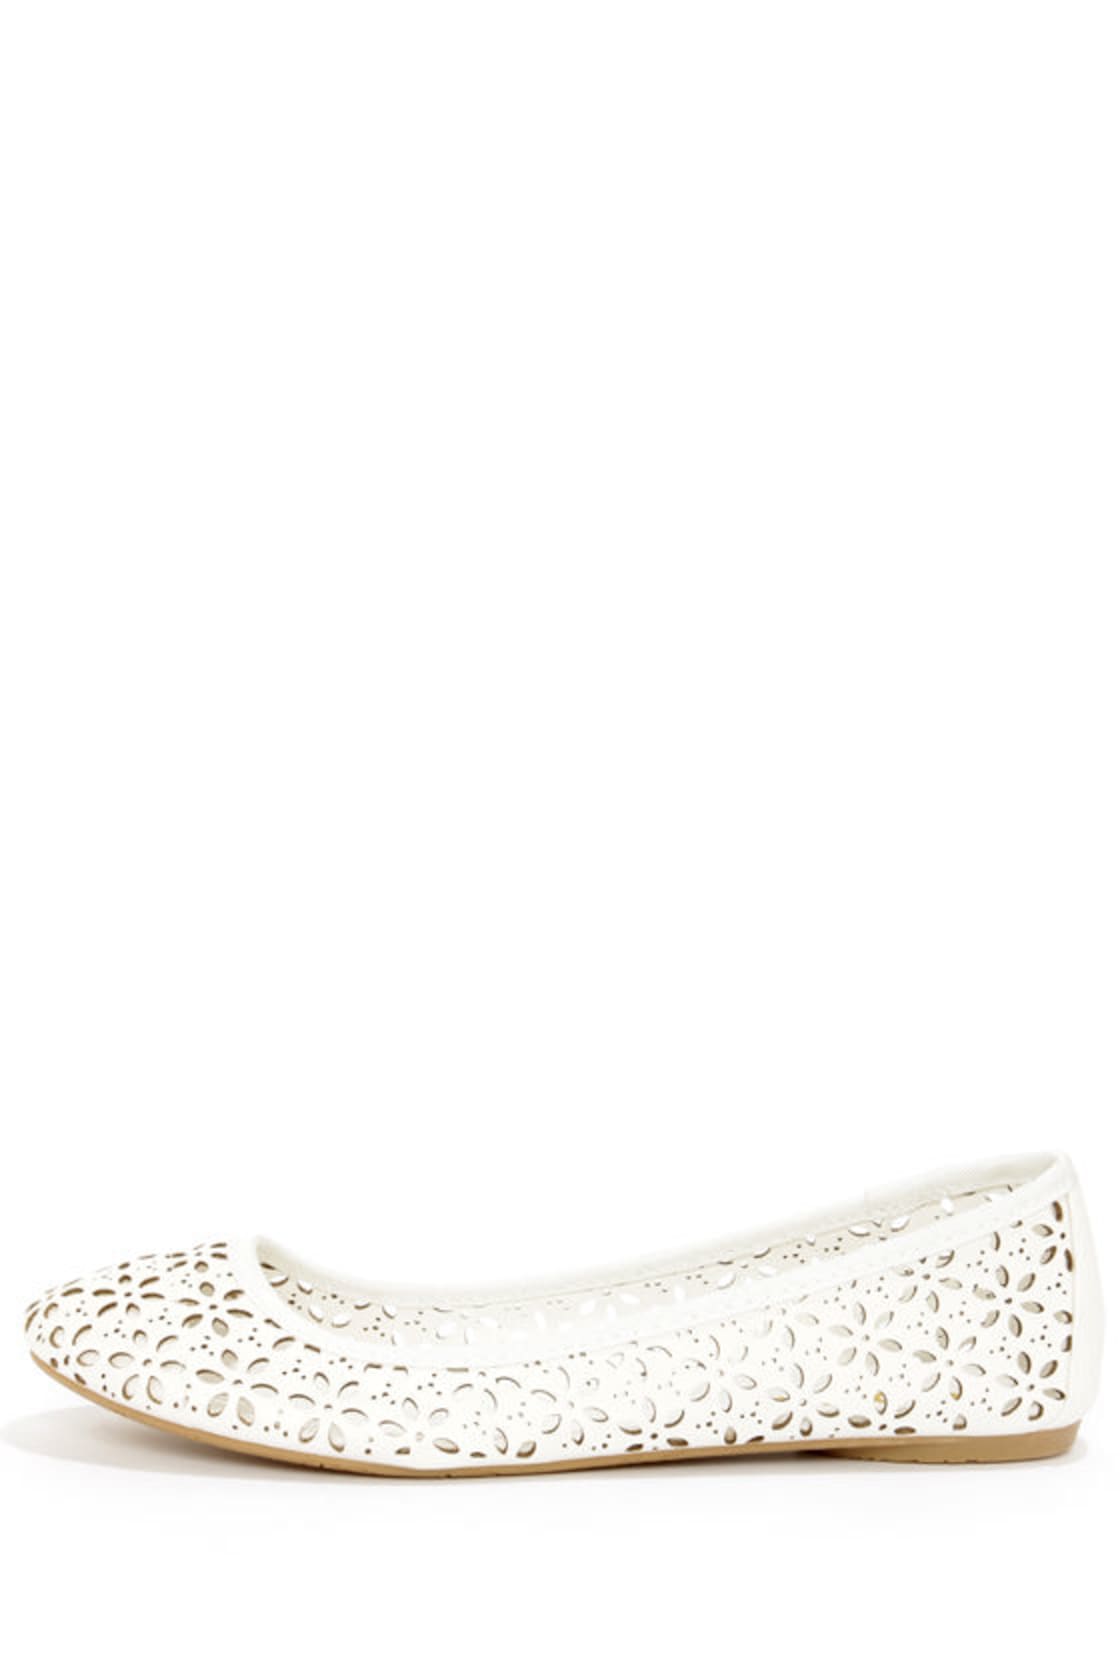 Cute White Flats - Cutout Flats - Ballet Flats - White Shoes - $28.00 ...